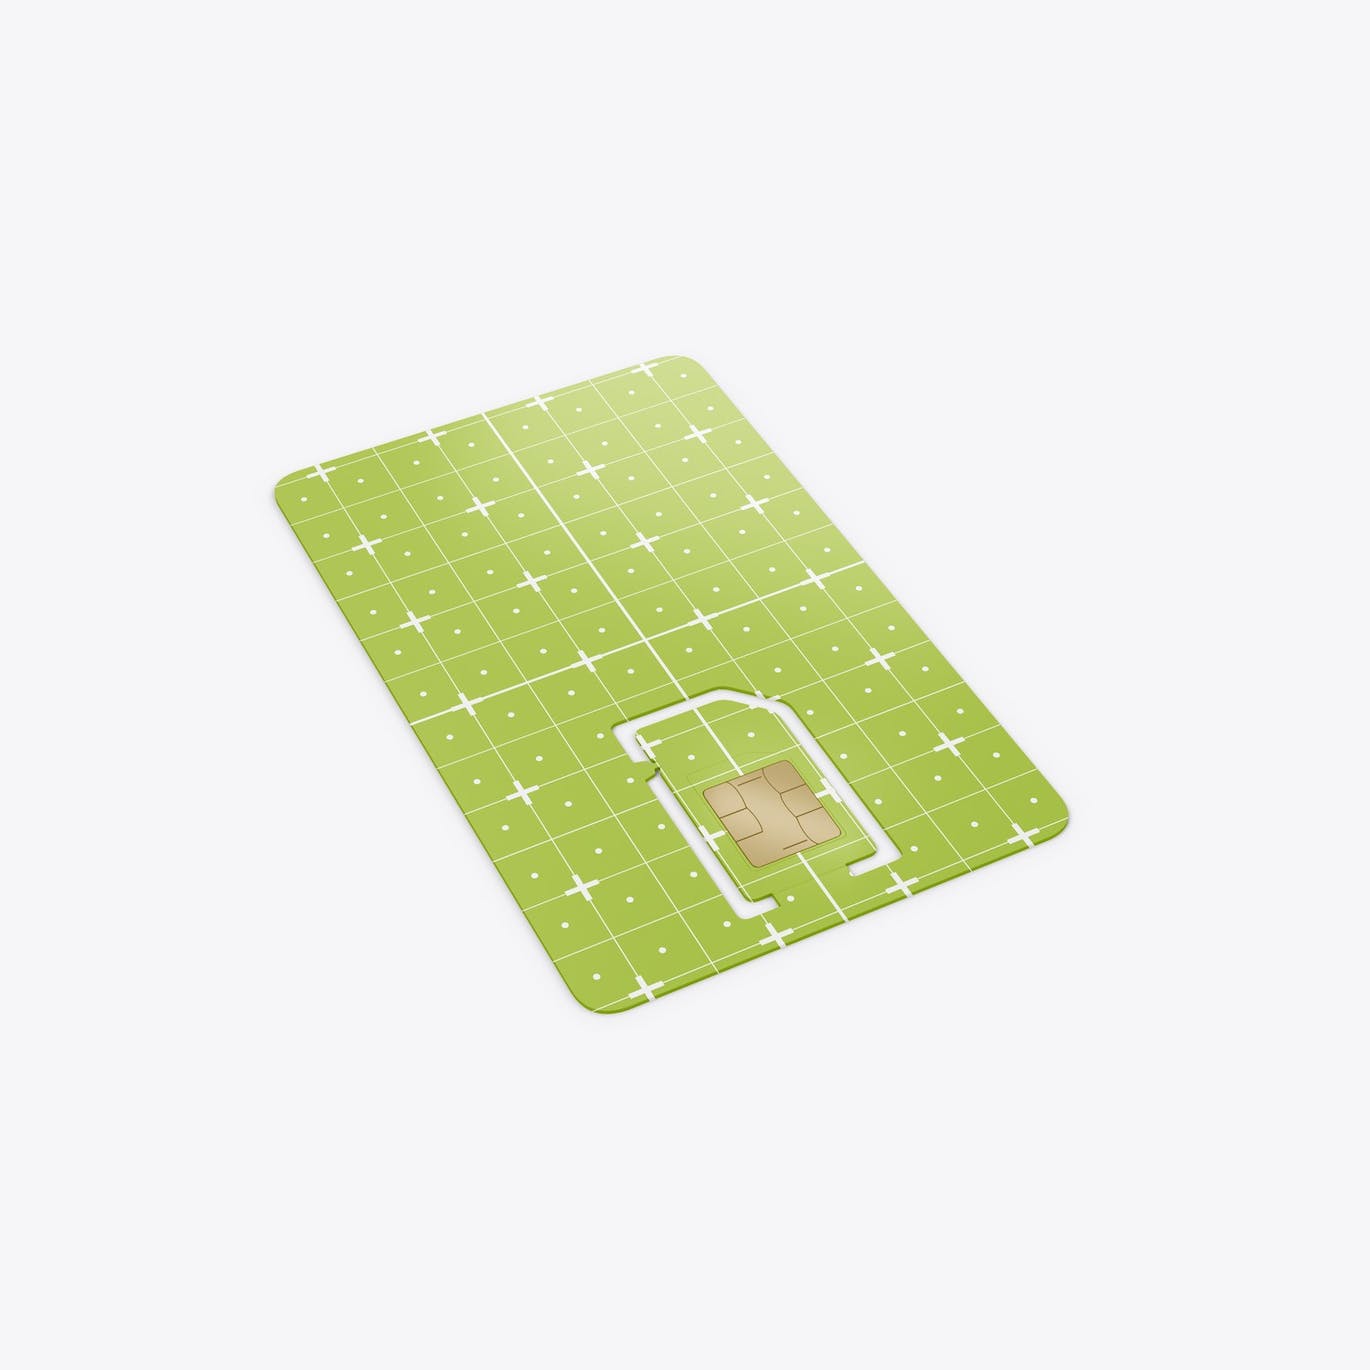 Sim手机卡品牌设计样机 Sim Card Mockup 样机素材 第5张